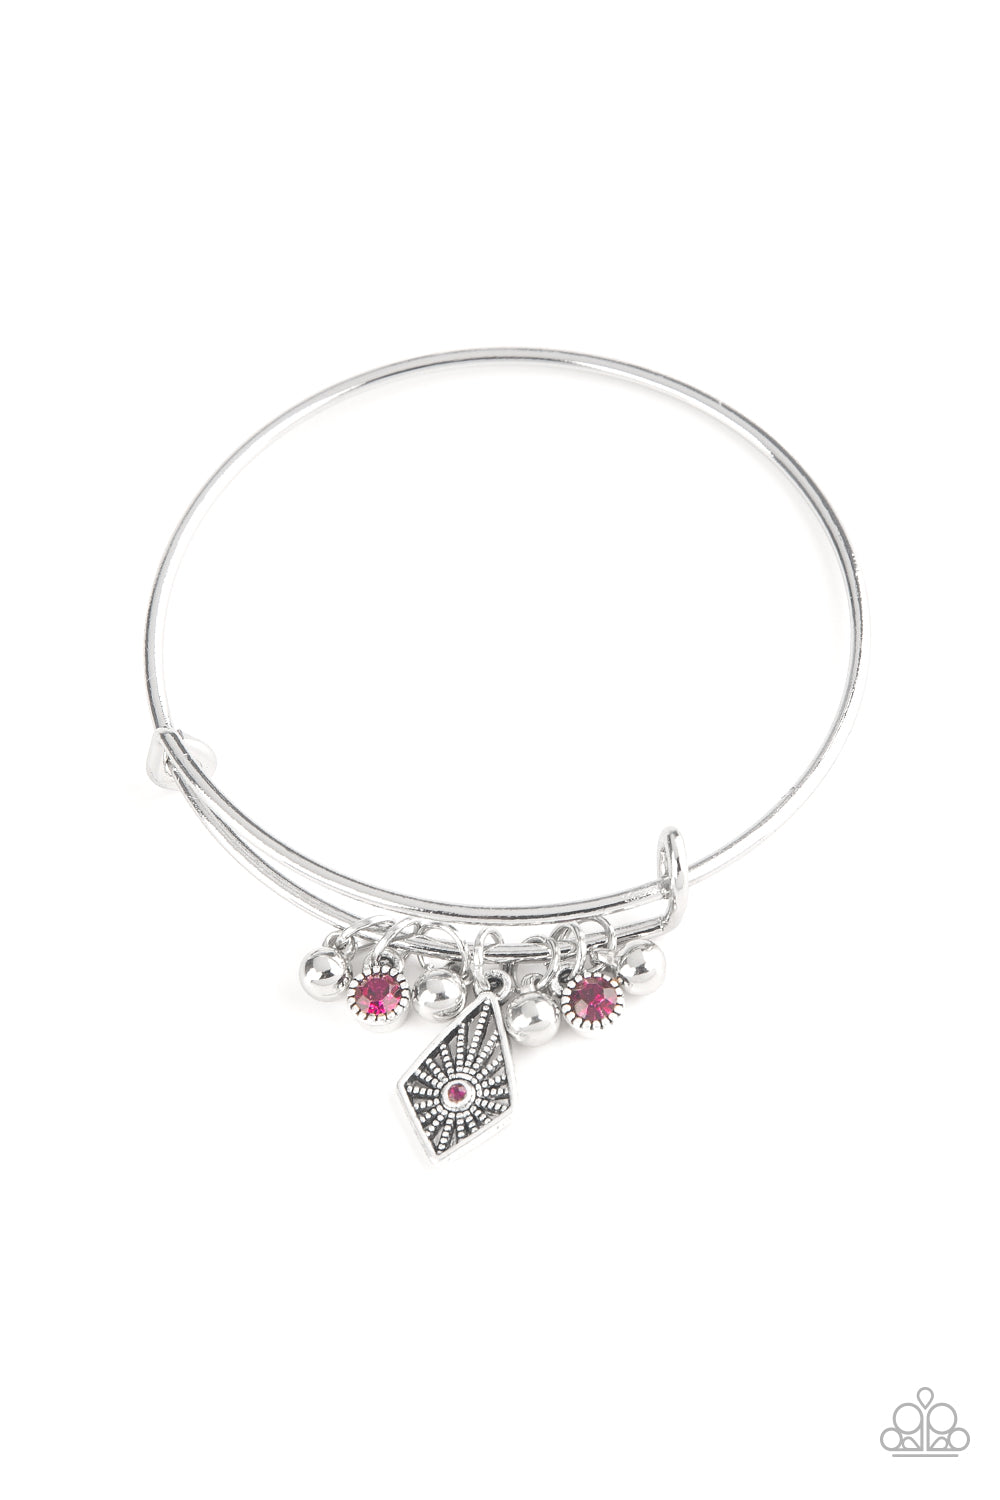 Treasure Charms - Pink Bracelet - Princess Glam Shop